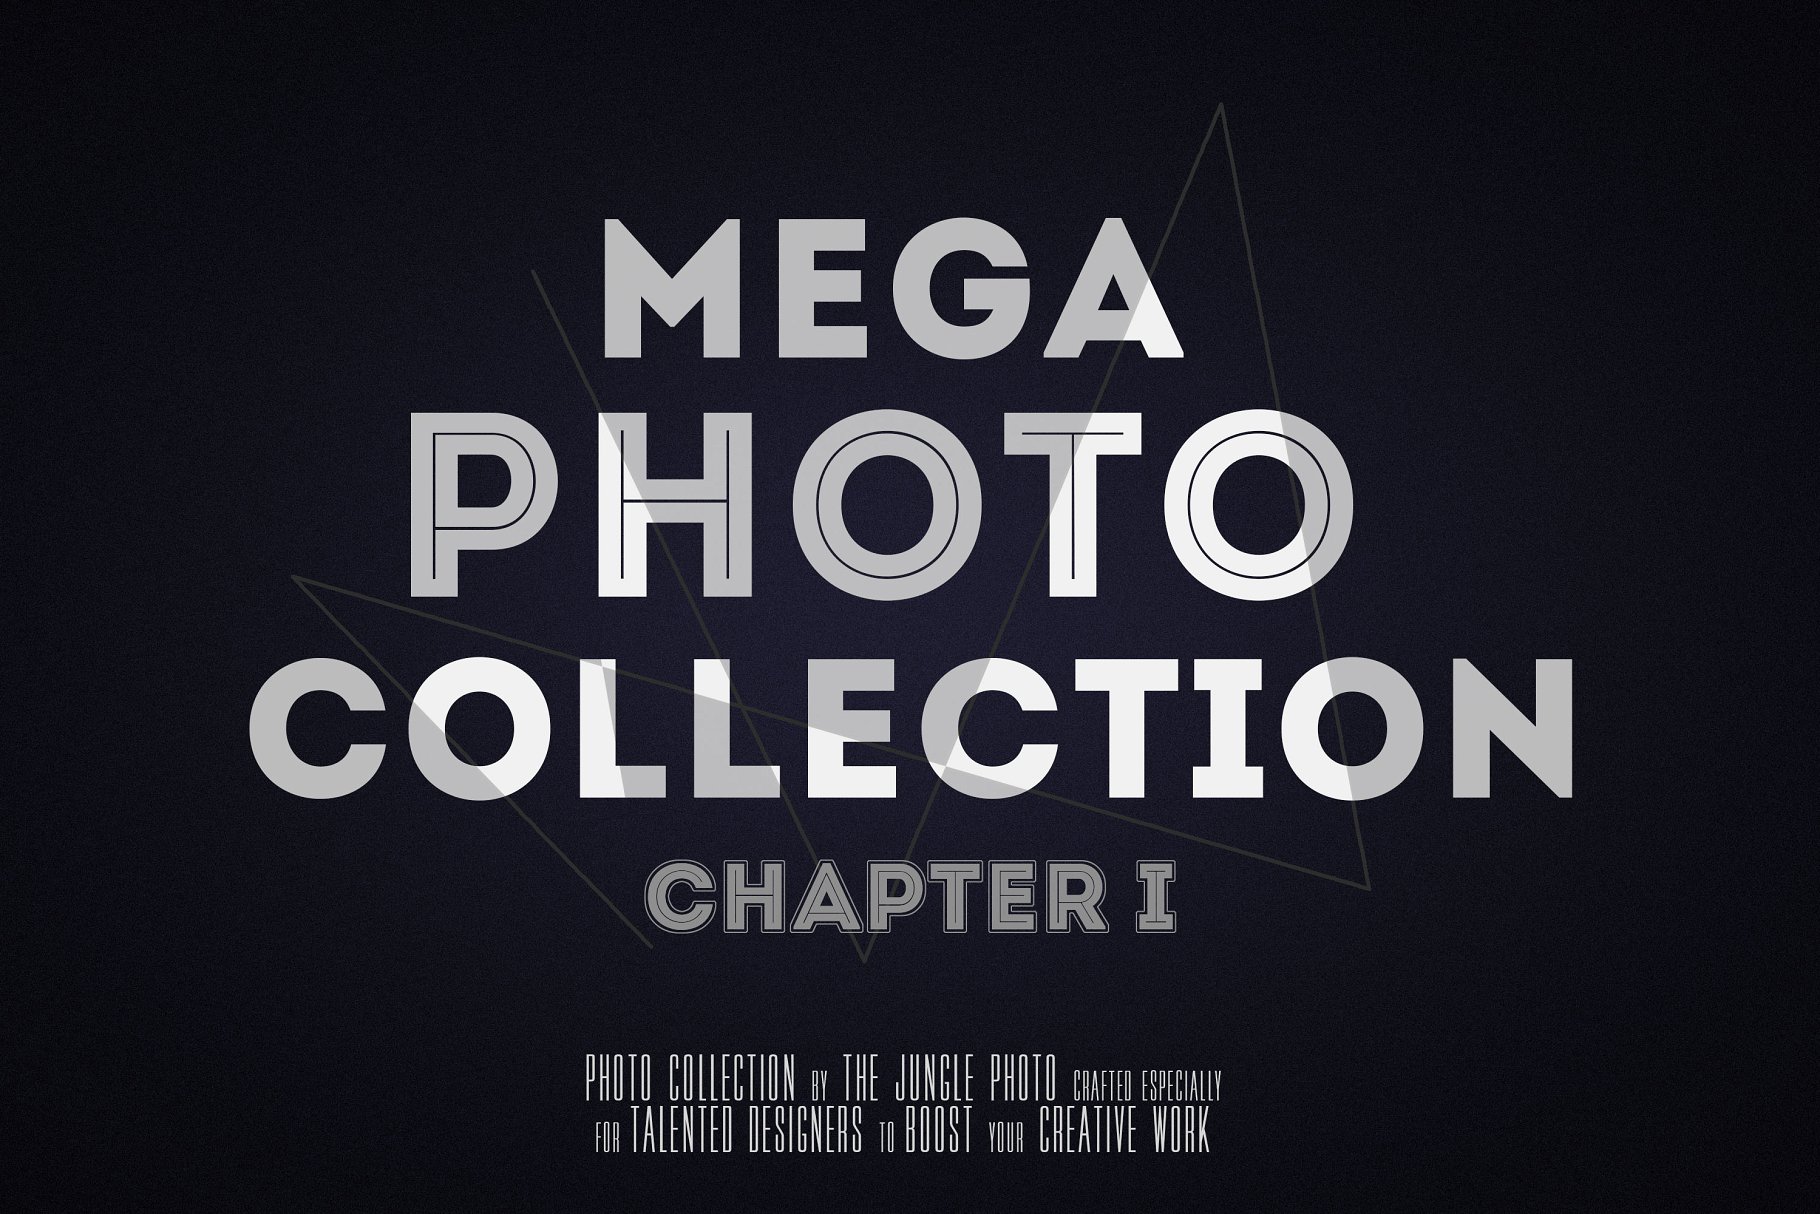 200张摄影大师精选高清照片合集 200 Photos Mega Collection CHAPTER 1插图